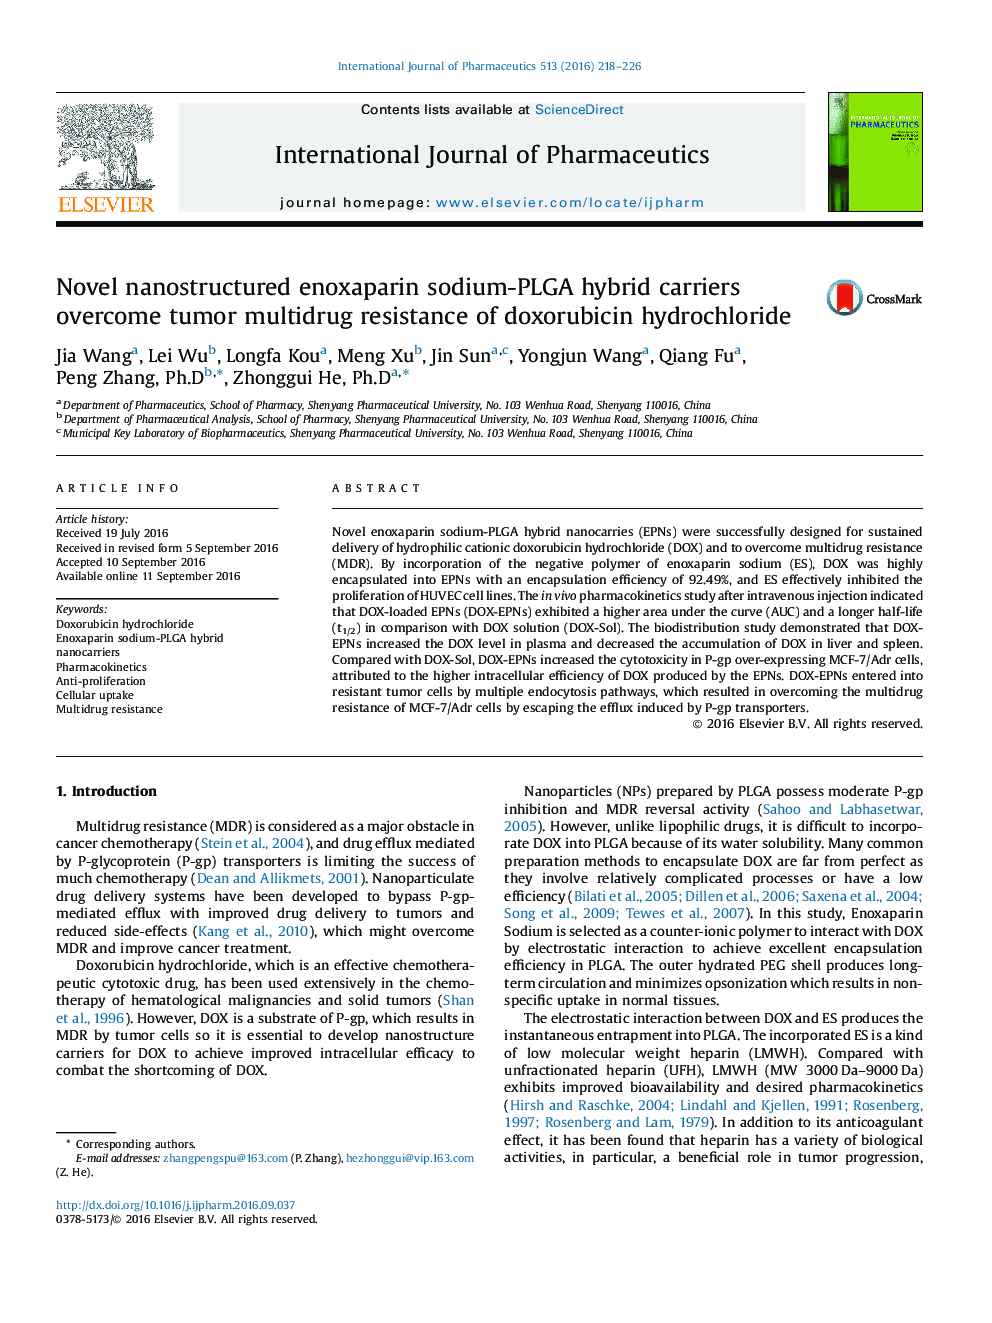 Novel nanostructured enoxaparin sodium-PLGA hybrid carriers overcome tumor multidrug resistance of doxorubicin hydrochloride